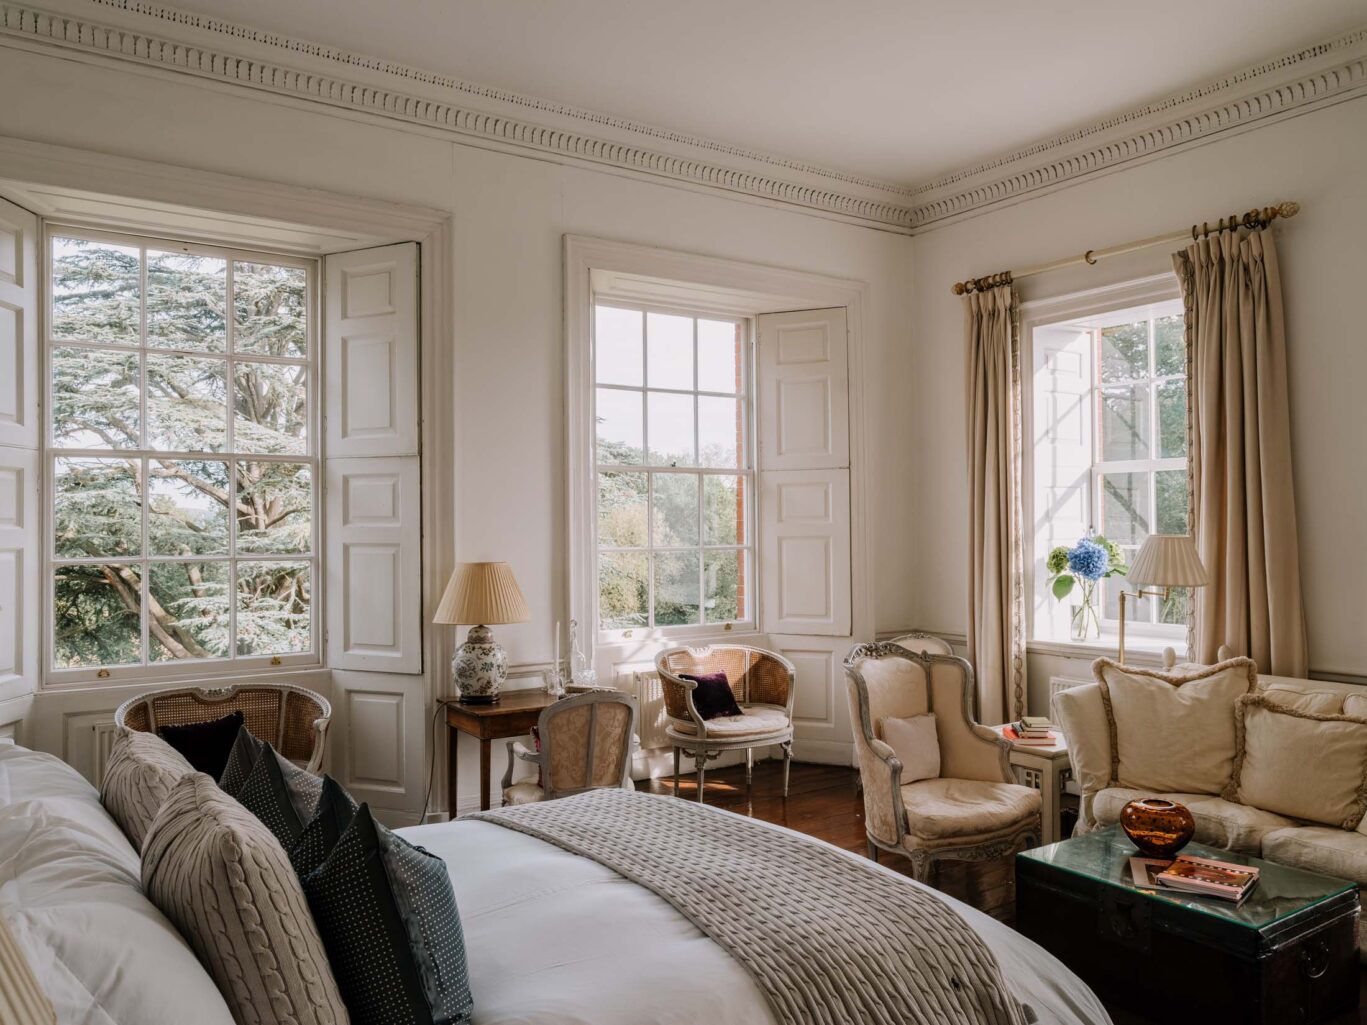 Luxury bedroom with beautiful views